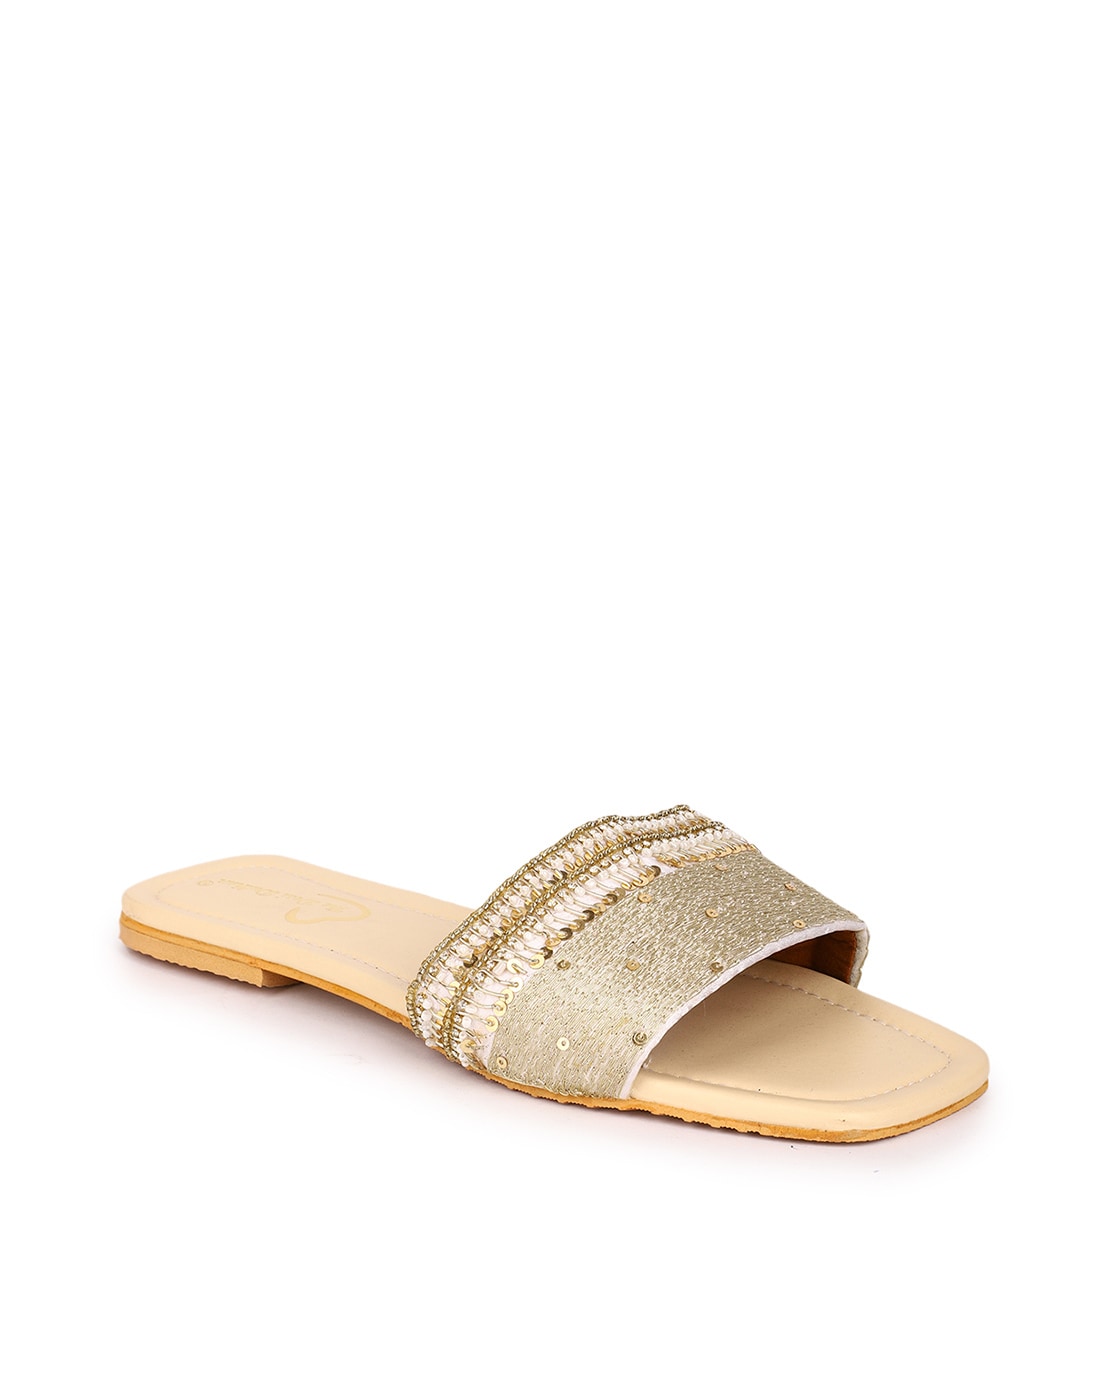 Hvyesh Women's Flat Sandals Bling Rhinestone Strap Band Open Toe Slide  Sandals Dress Beach Shoes Gold US 6 - Walmart.com